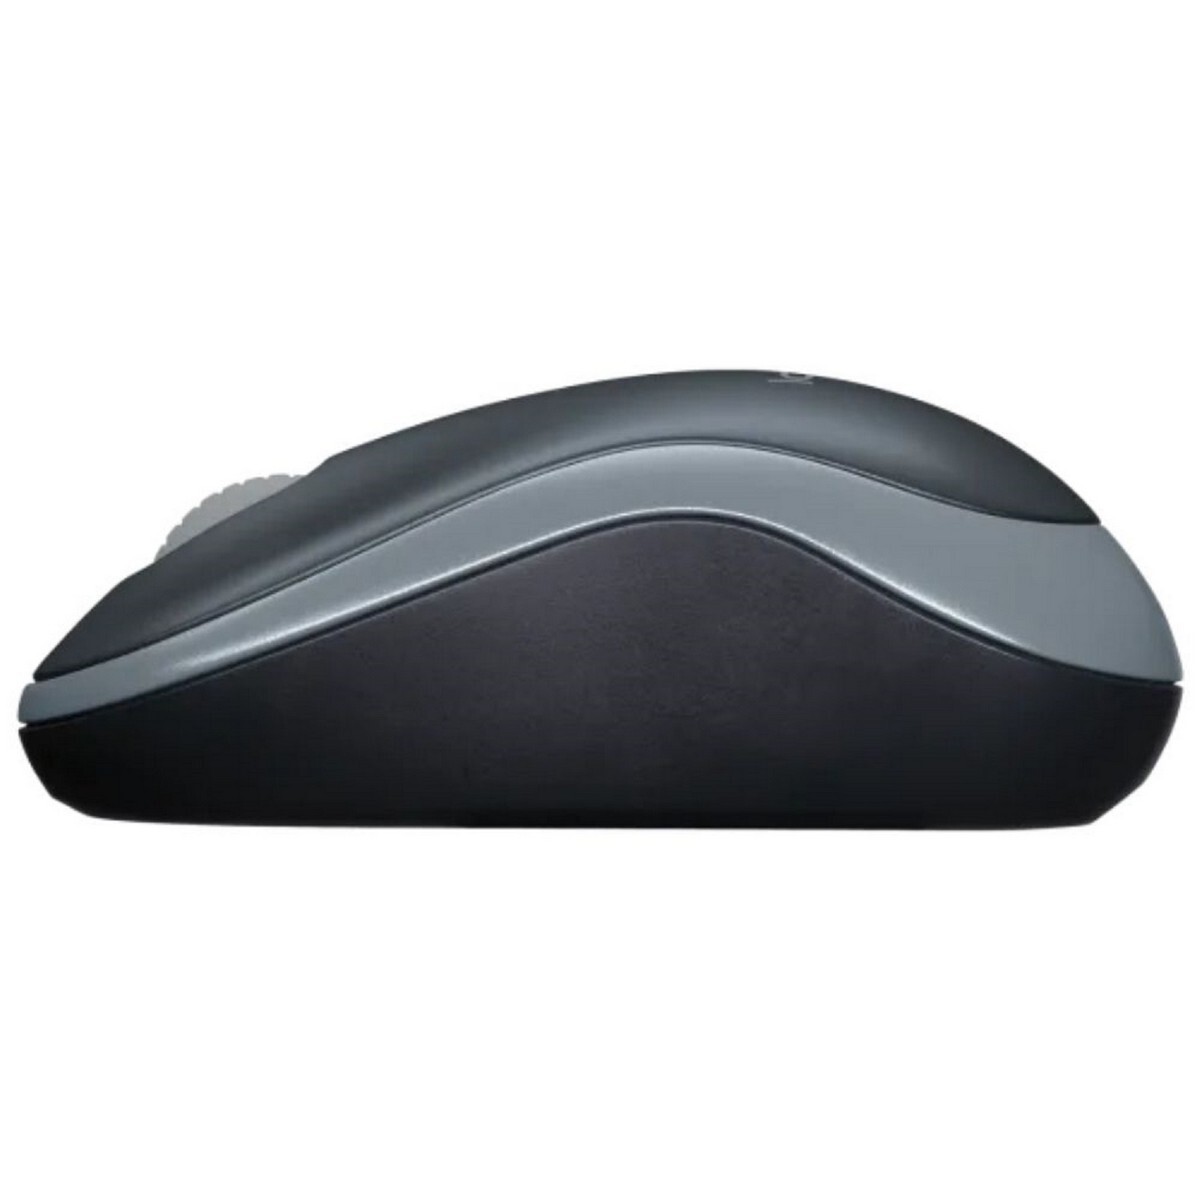 Logitech Wireless Mouse M185 Grey